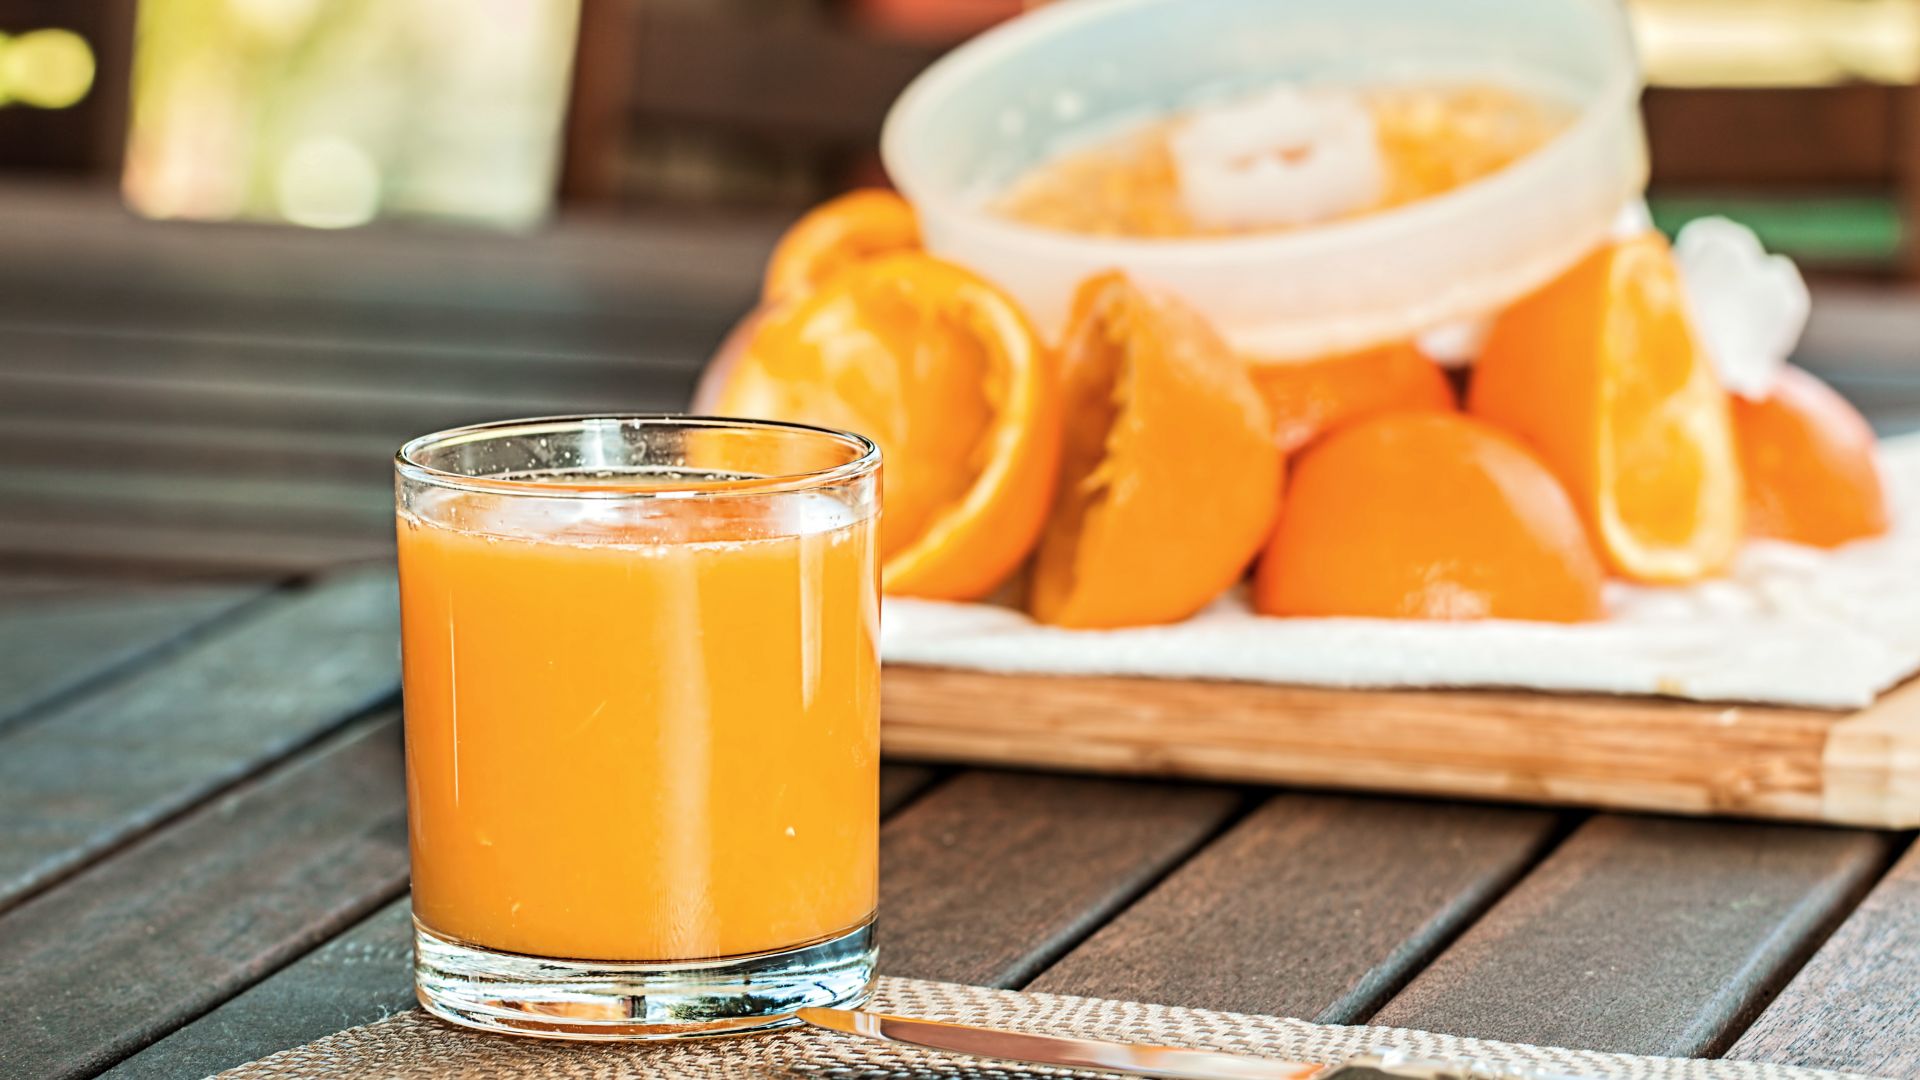 Wallpaper Orange citrus fresh fruit juice